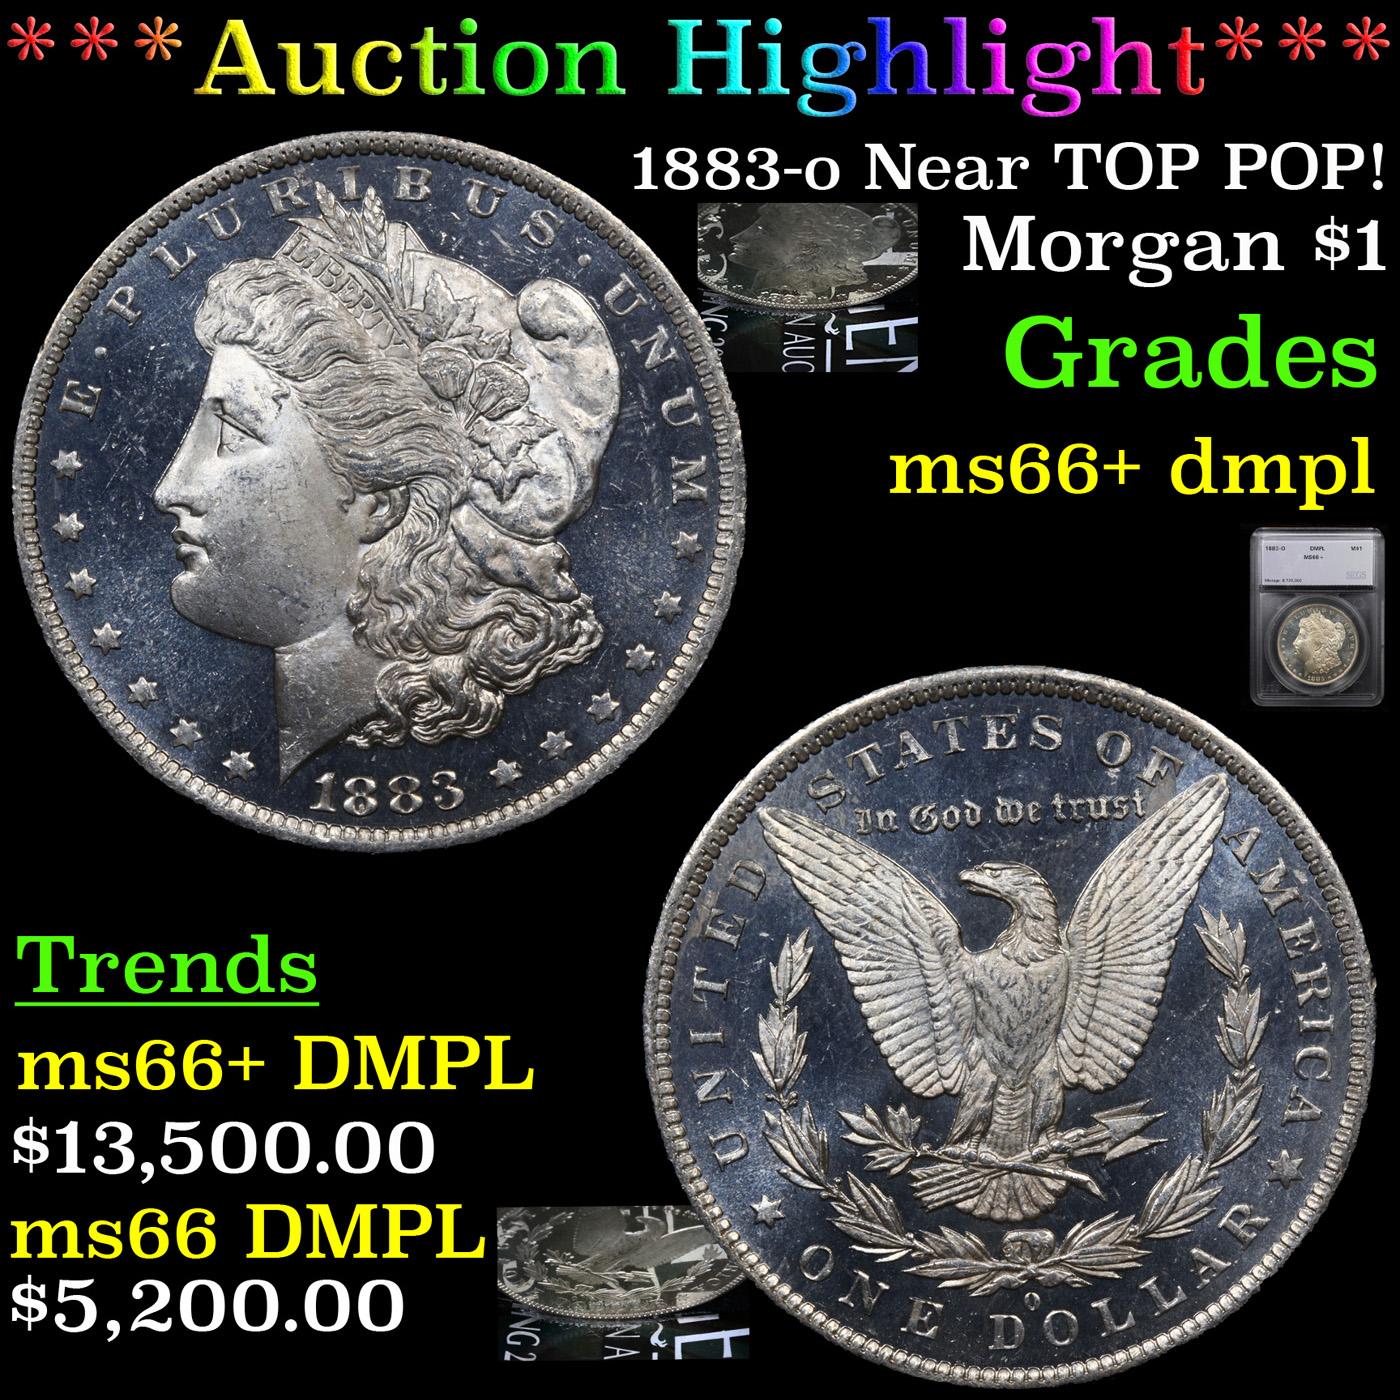 ***Auction Highlight*** 1883-o Near TOP POP! Morgan Dollar $1 Graded ms66+ dmpl By SEGS (fc)